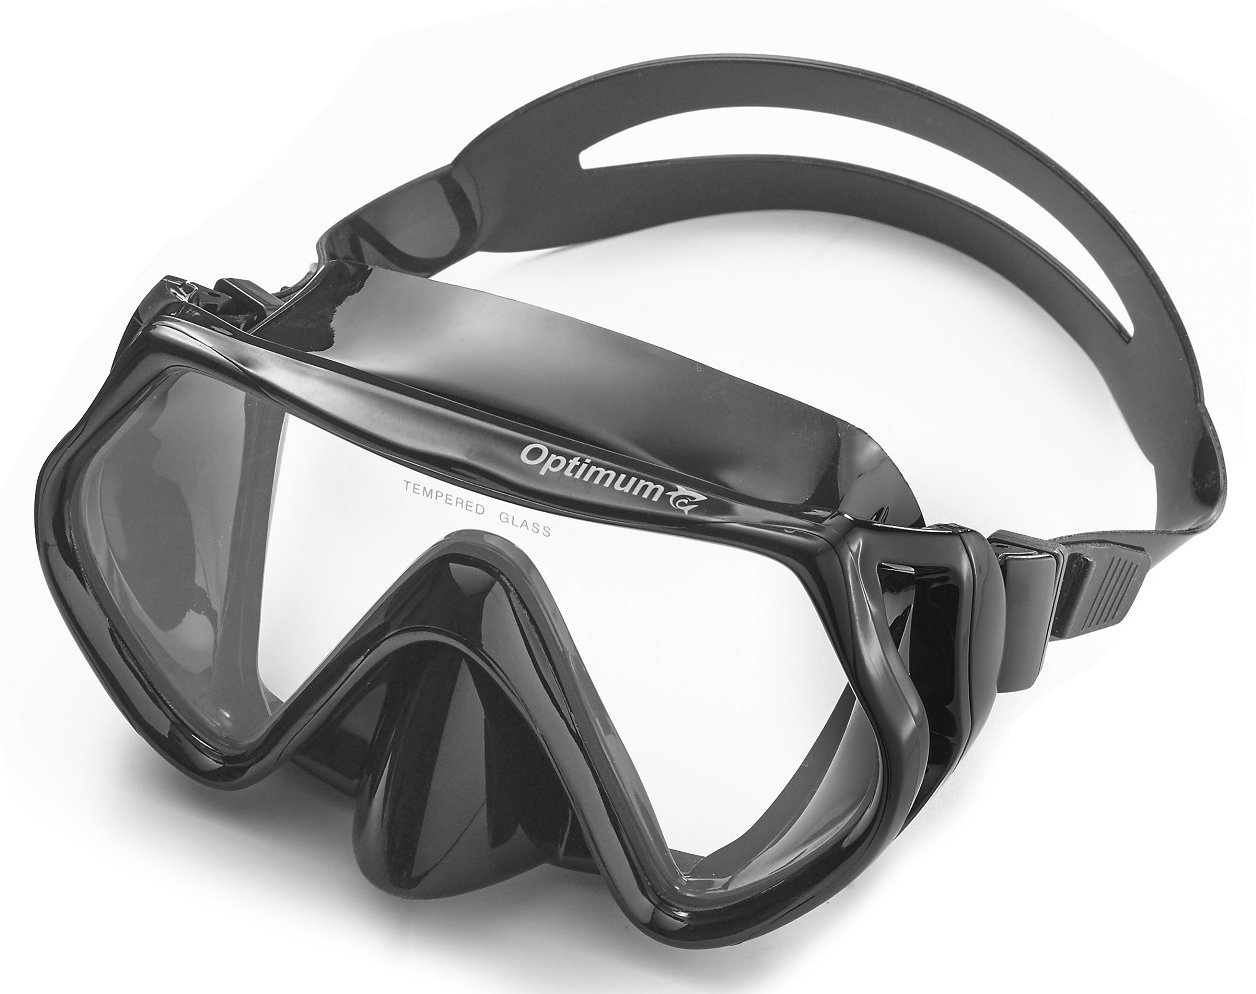 Top 10 Best Scuba Diving Masks